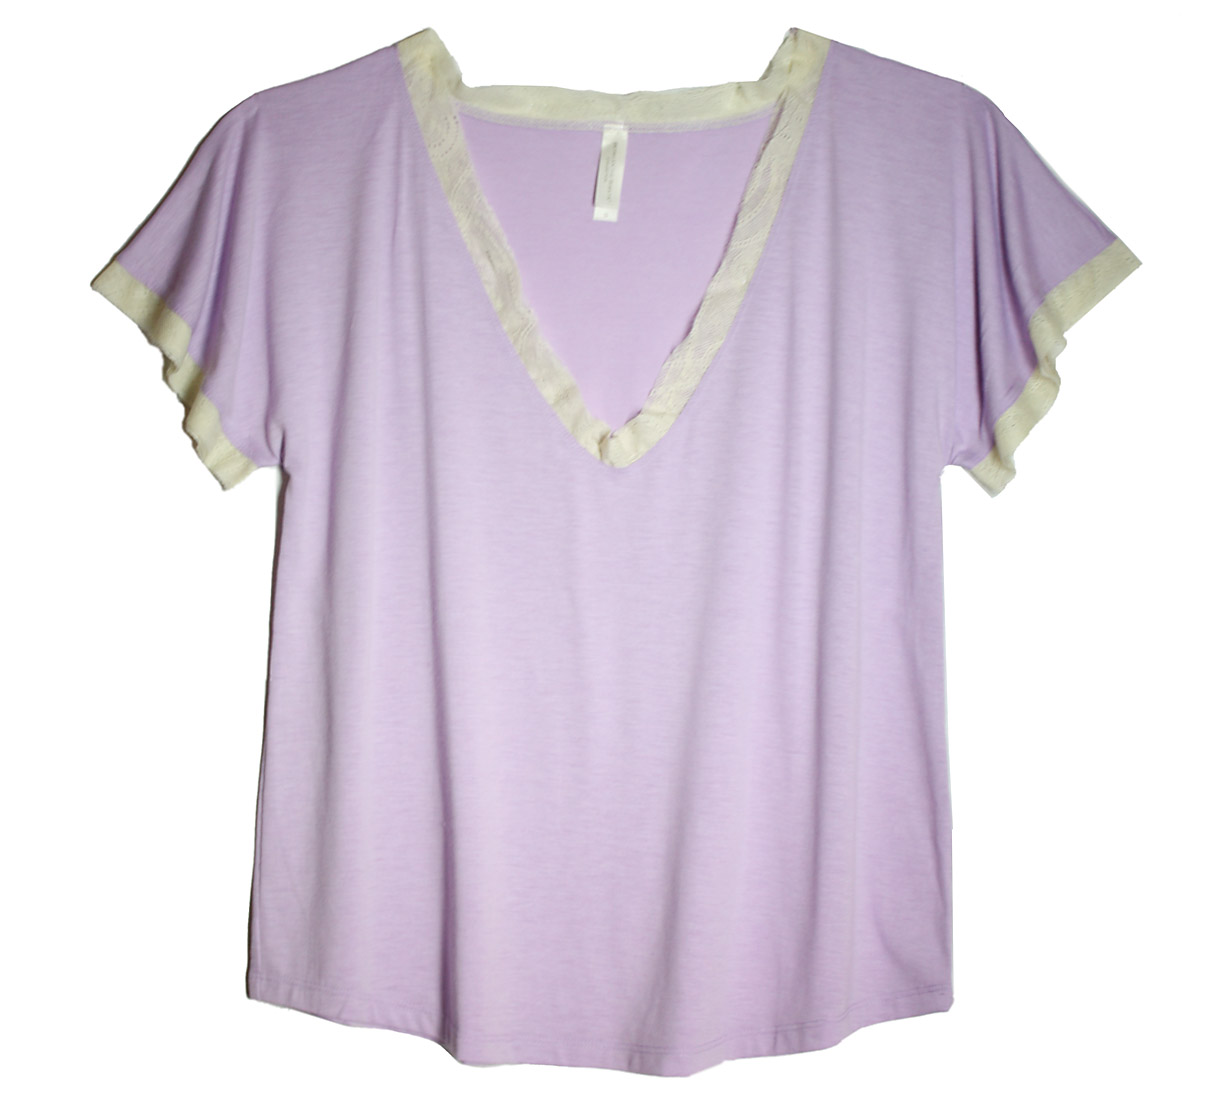 Venus in Play Lounge Tee in Lilac | Luxury Knit Nightwear | Between the Sheets Loungewear